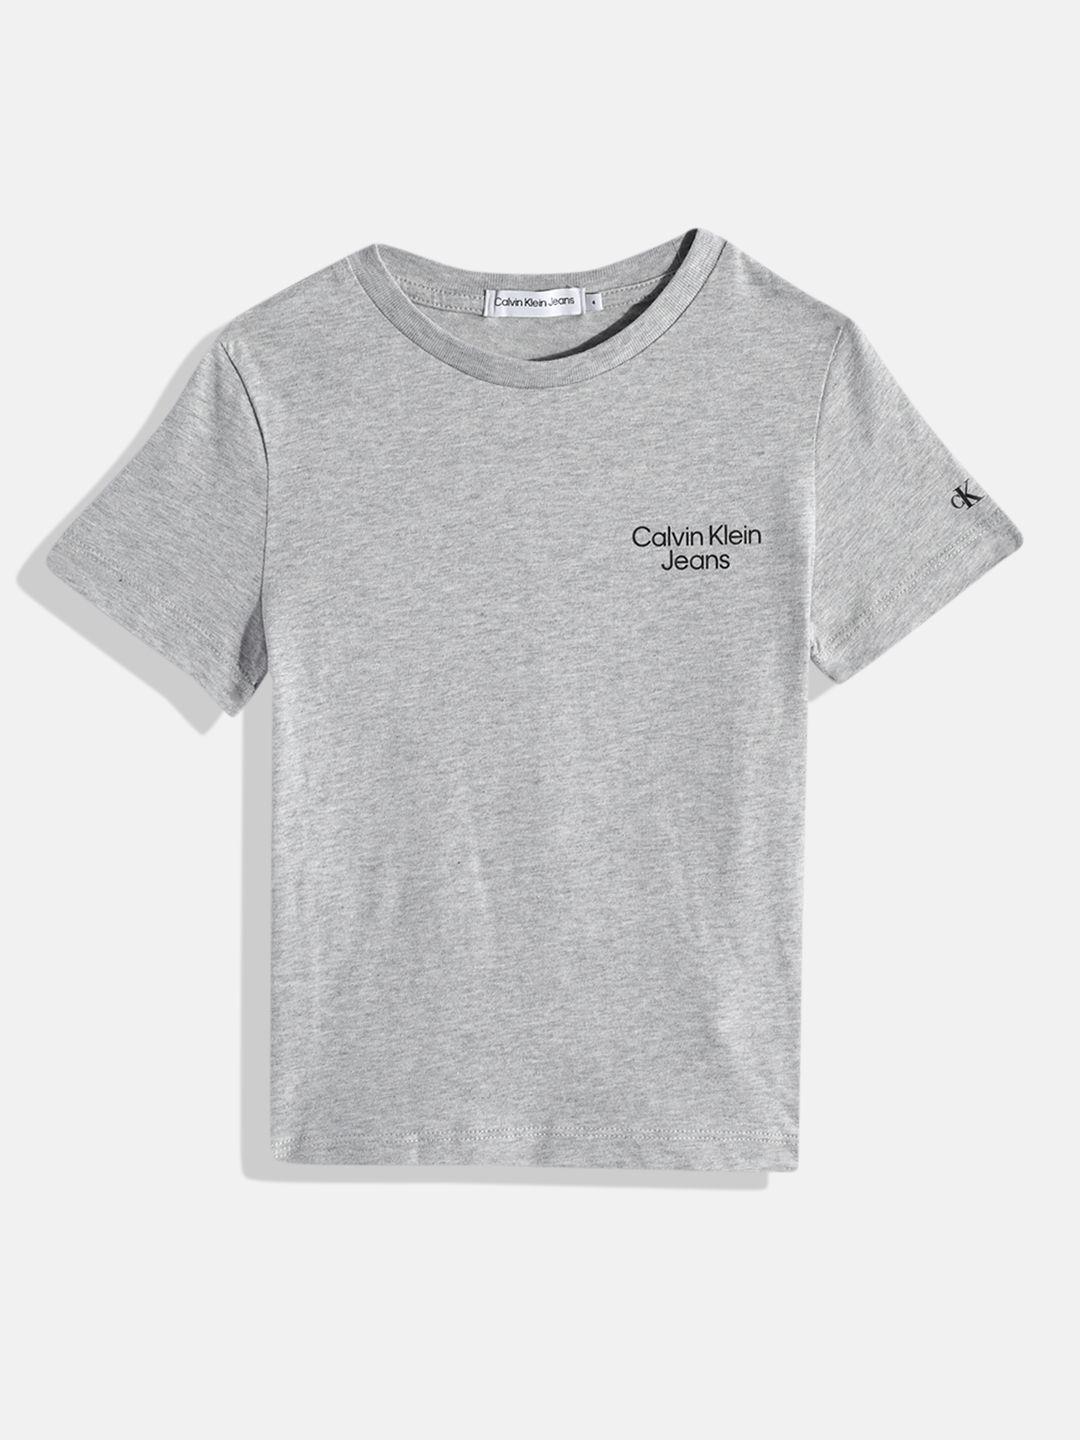 calvin klein jeans boys grey melange brand logo printed pure cotton t-shirt